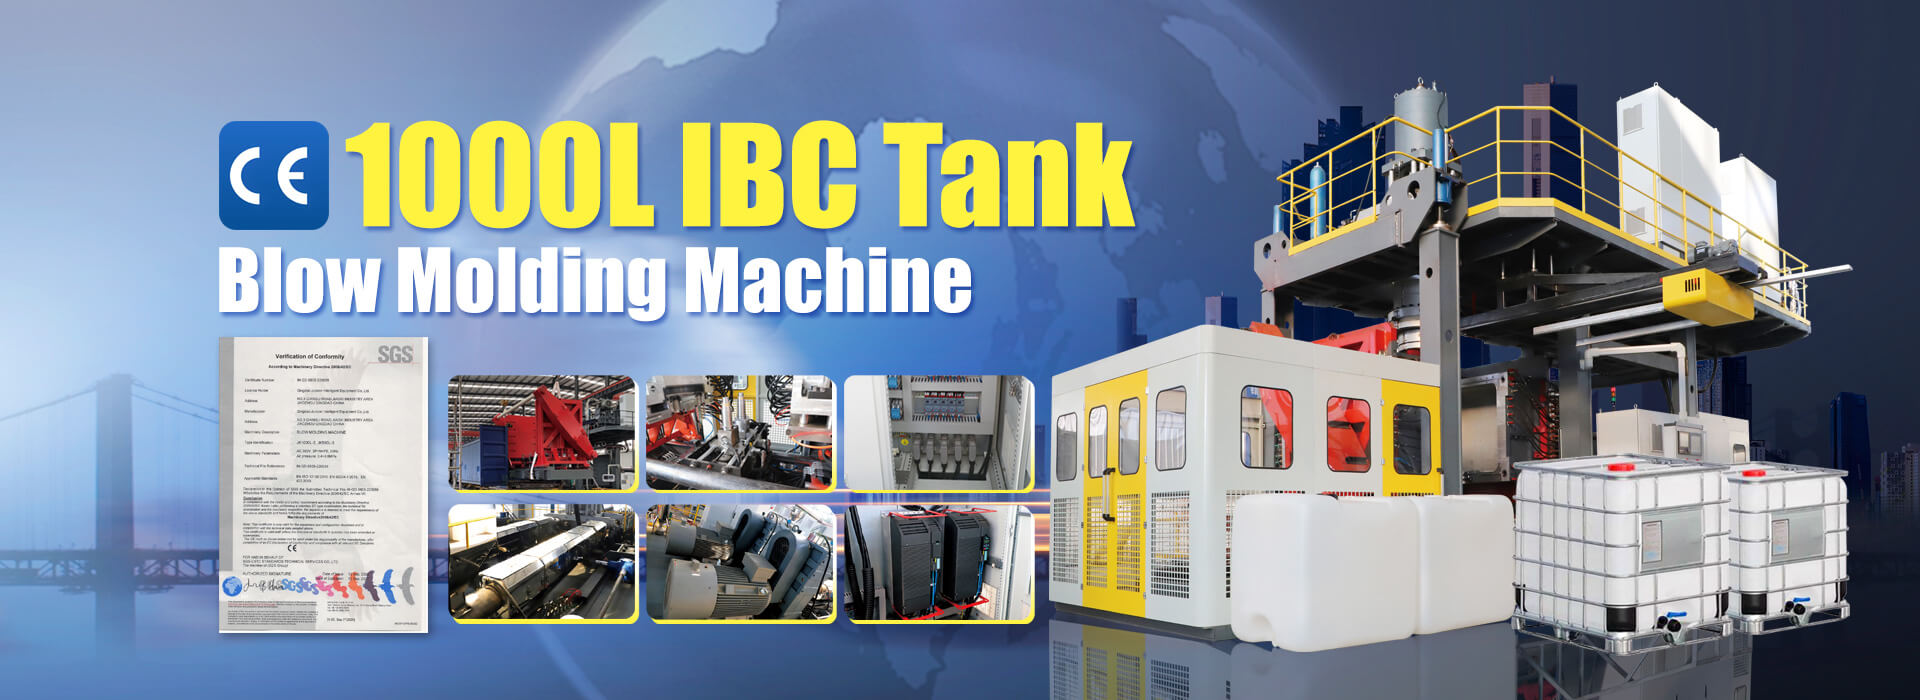 IBC Tank Blow Molding Machine